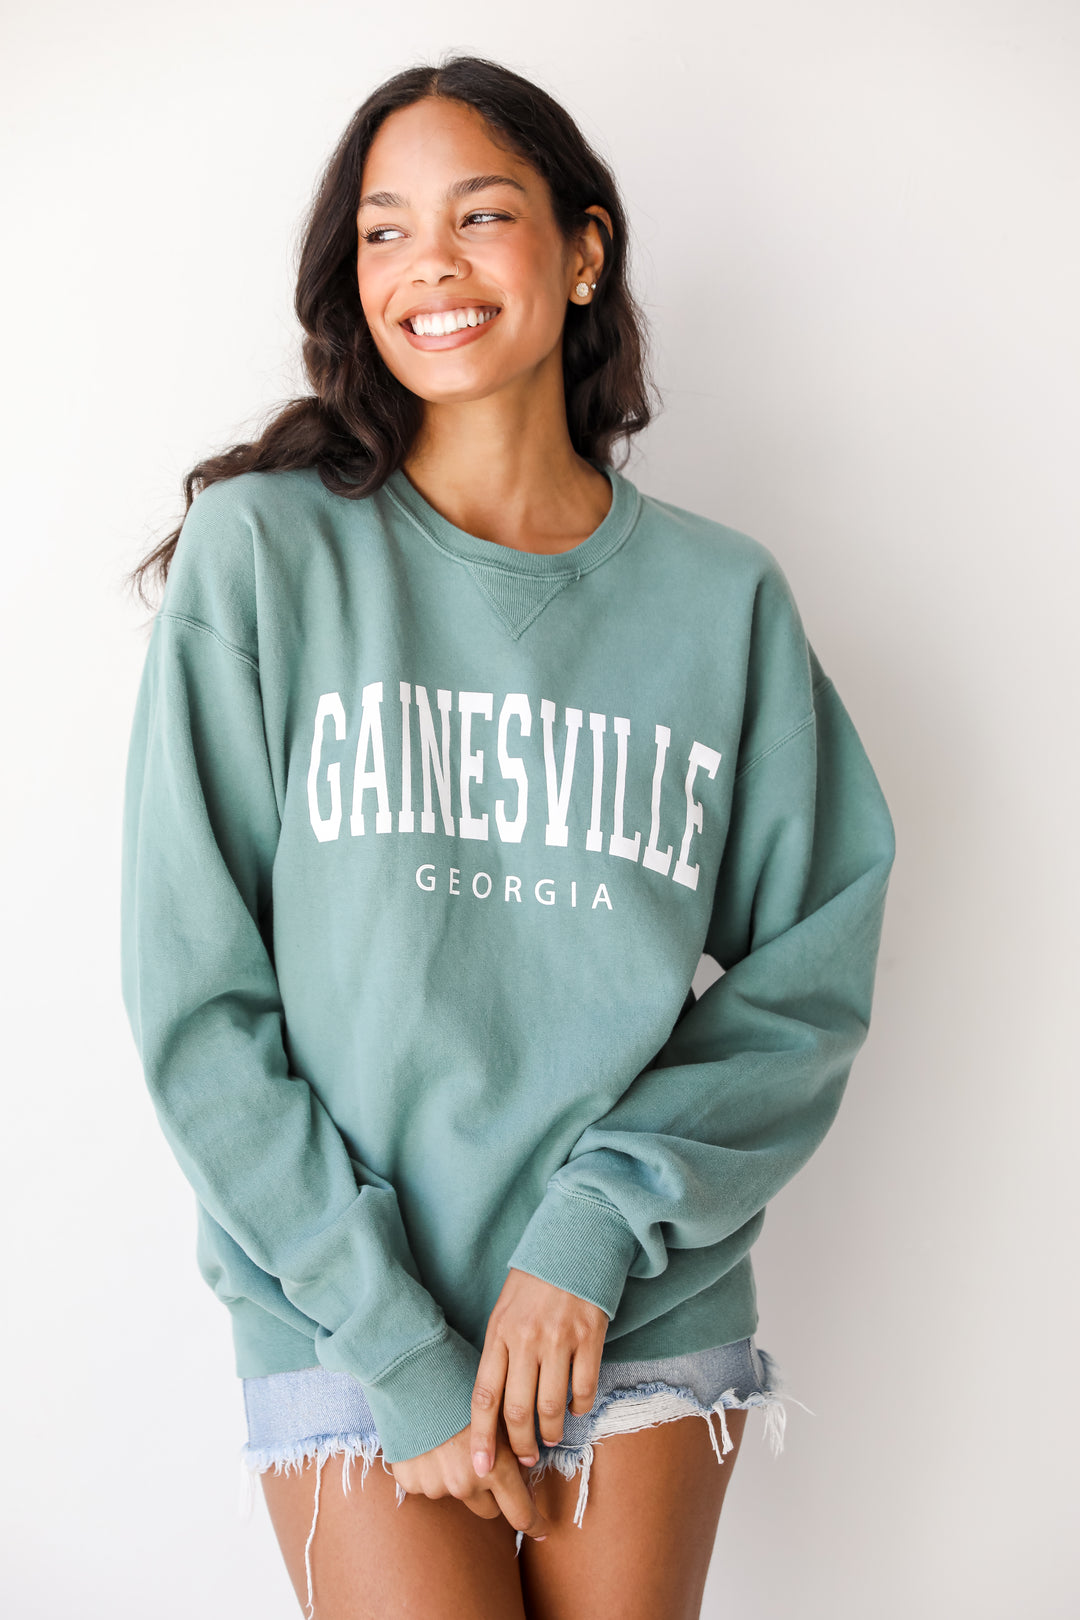 Seafoam Gainesville Georgia Pullover on model